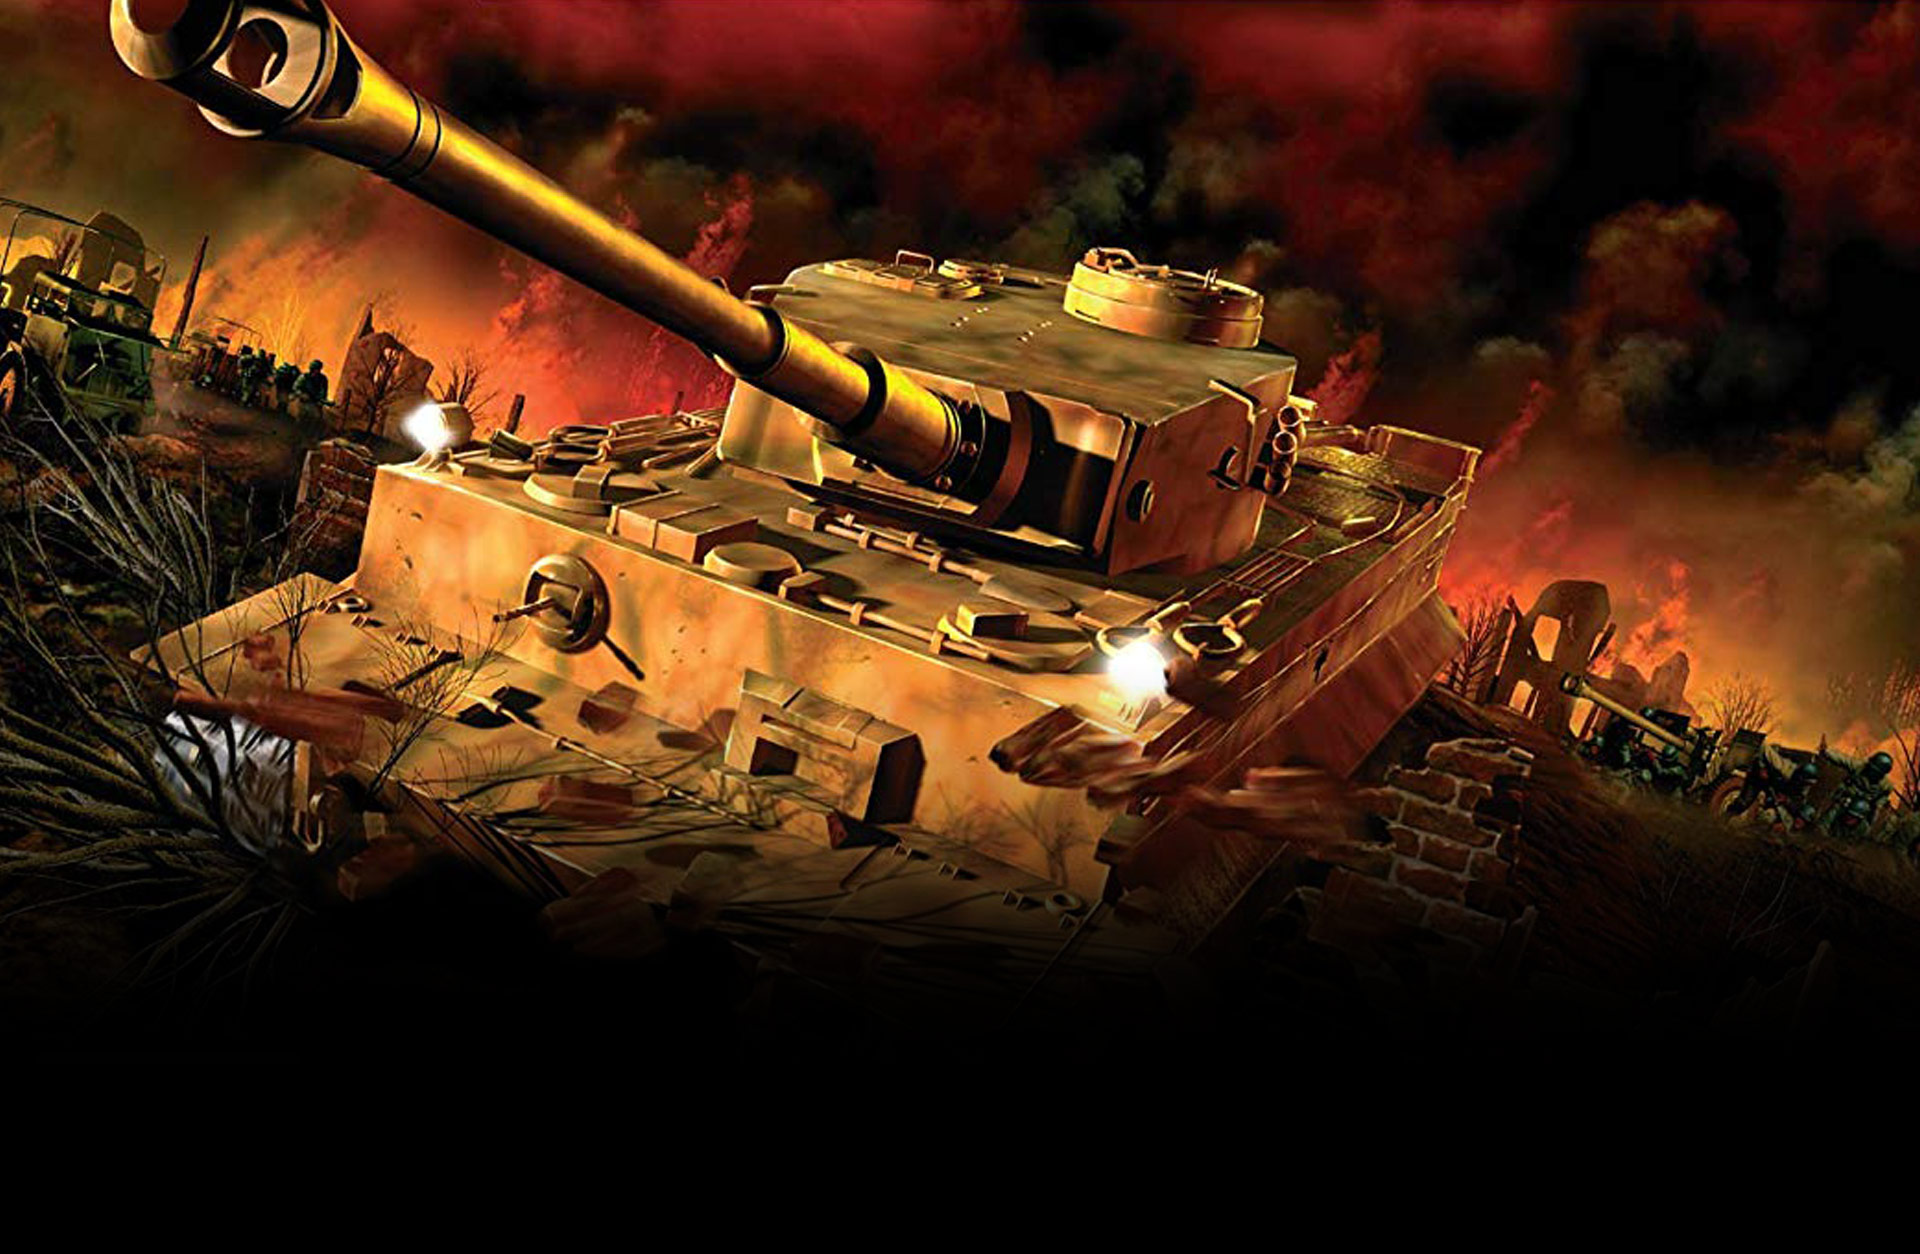 Panzer Elite - Special Edition